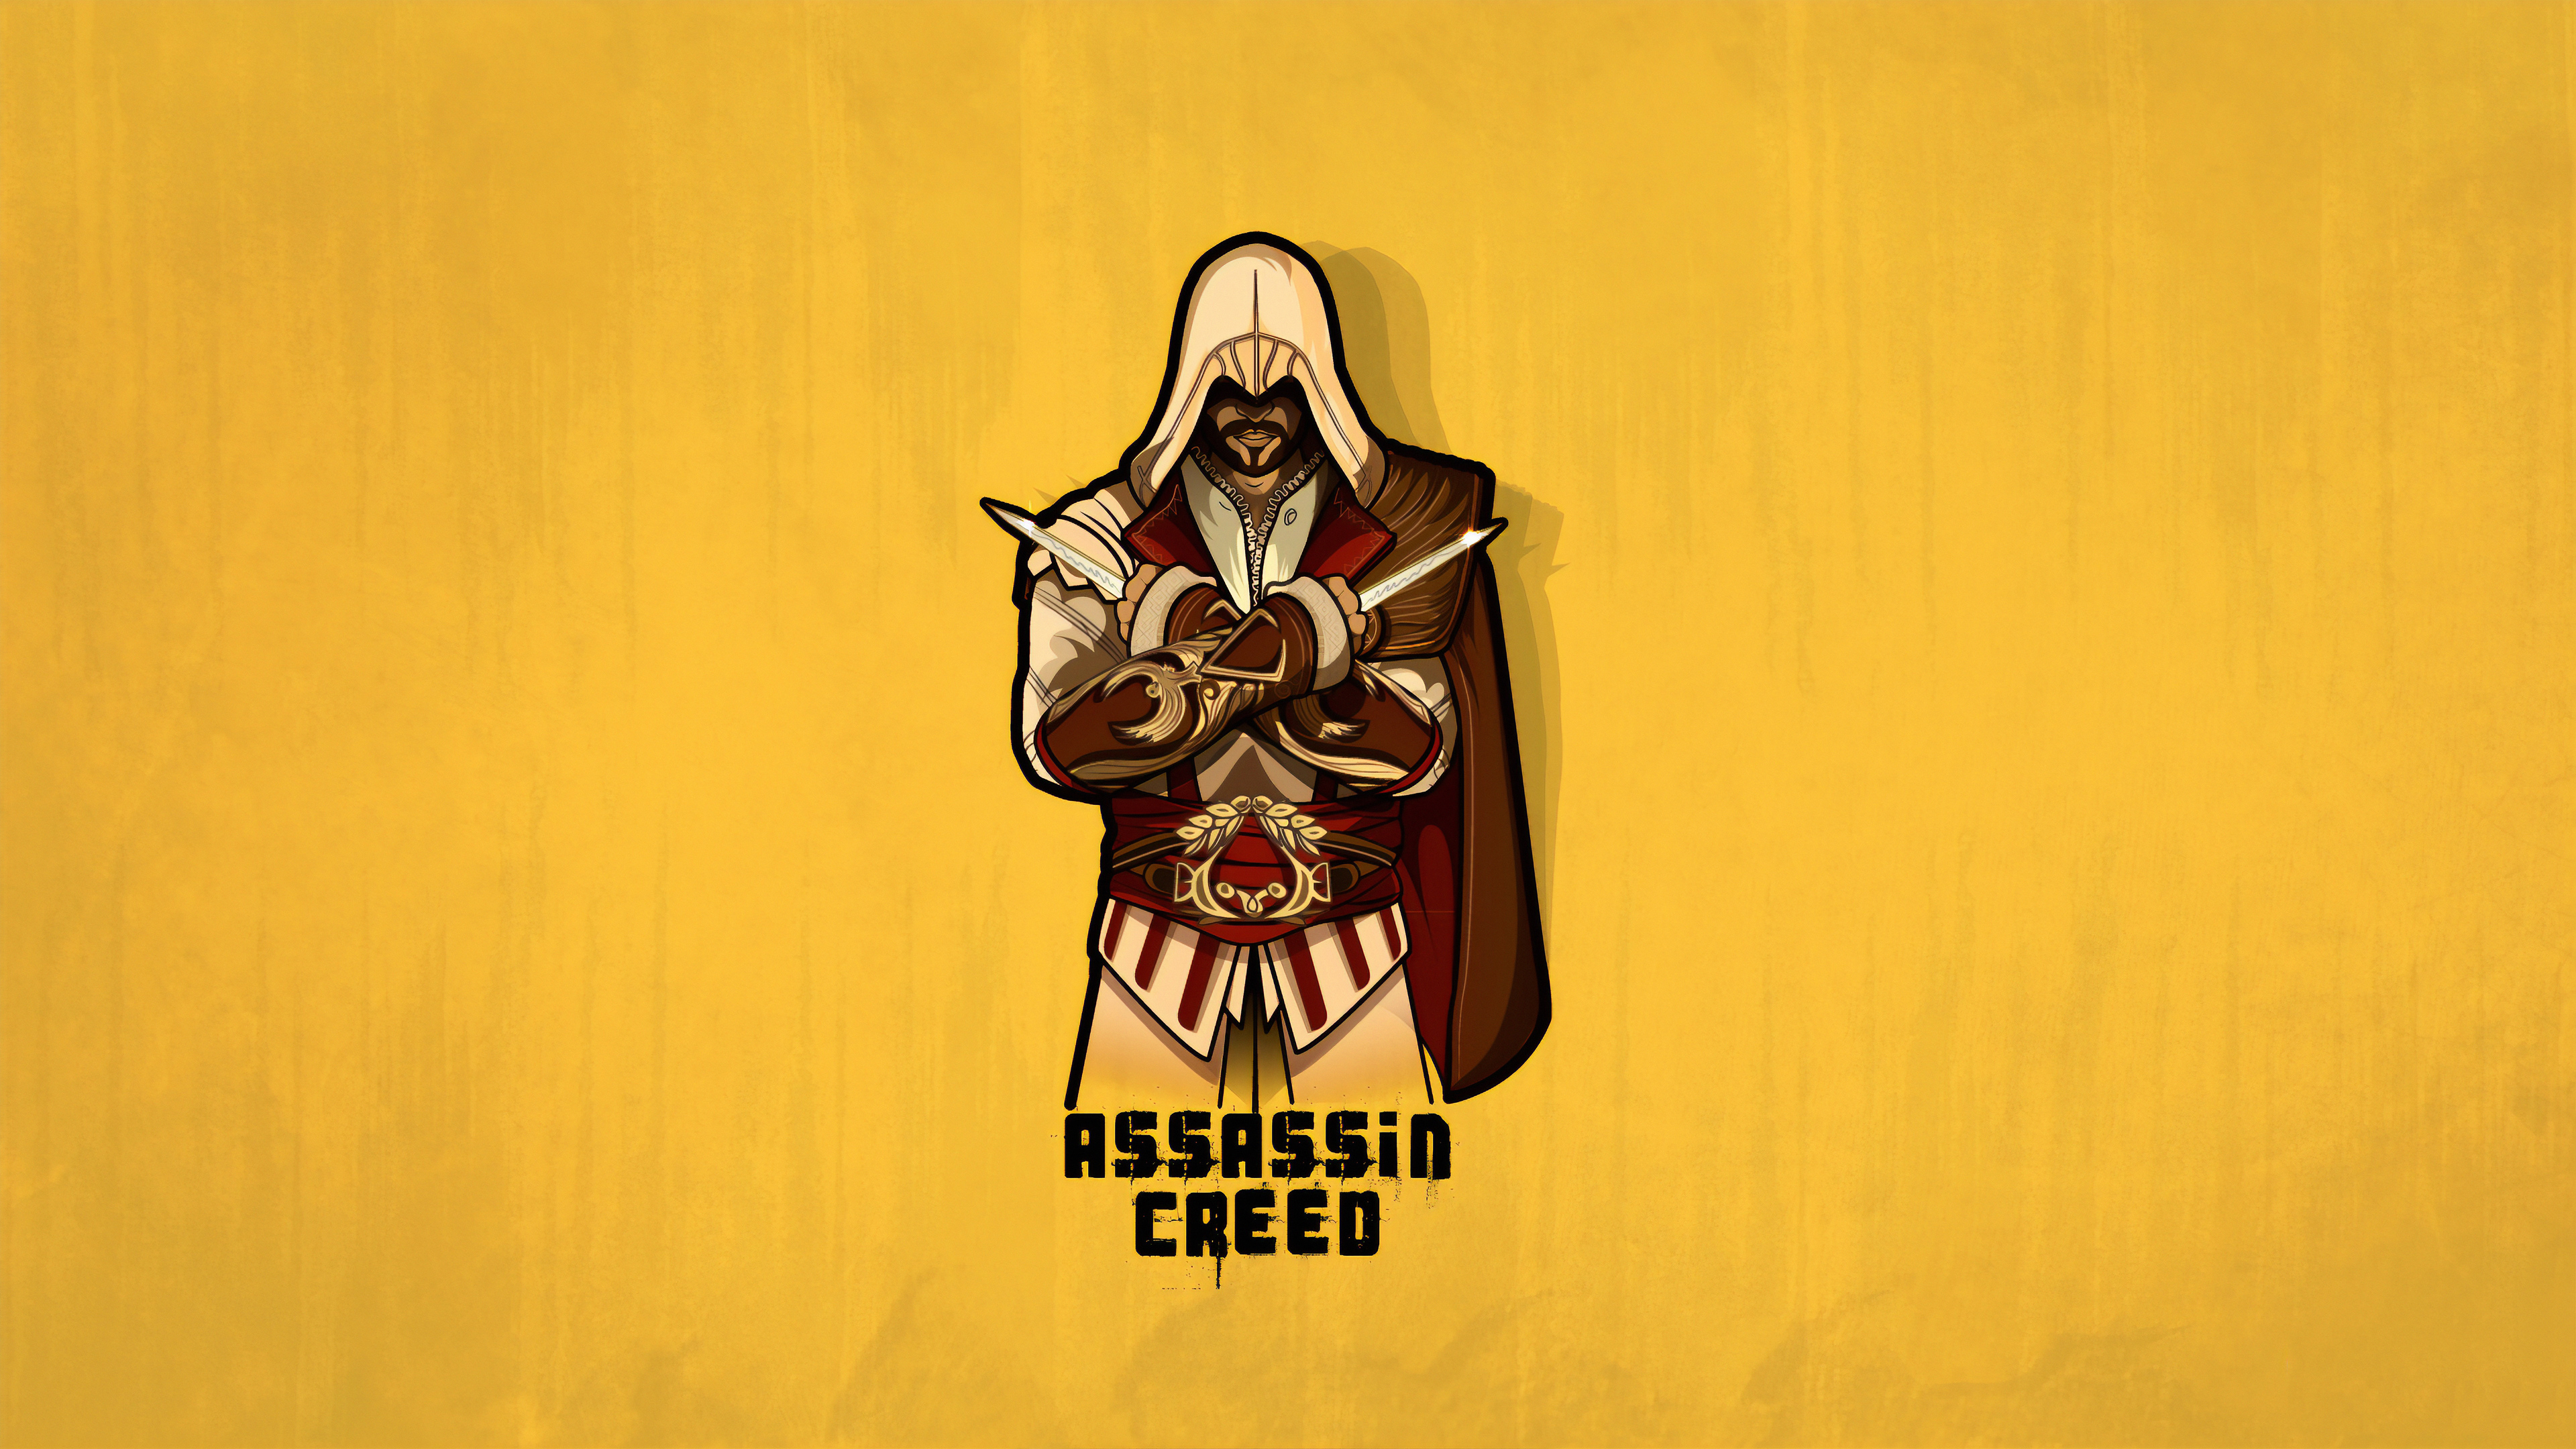 Minimal Assasins Creed - Assassin's Creed Wallpaper Iphone - HD Wallpaper 